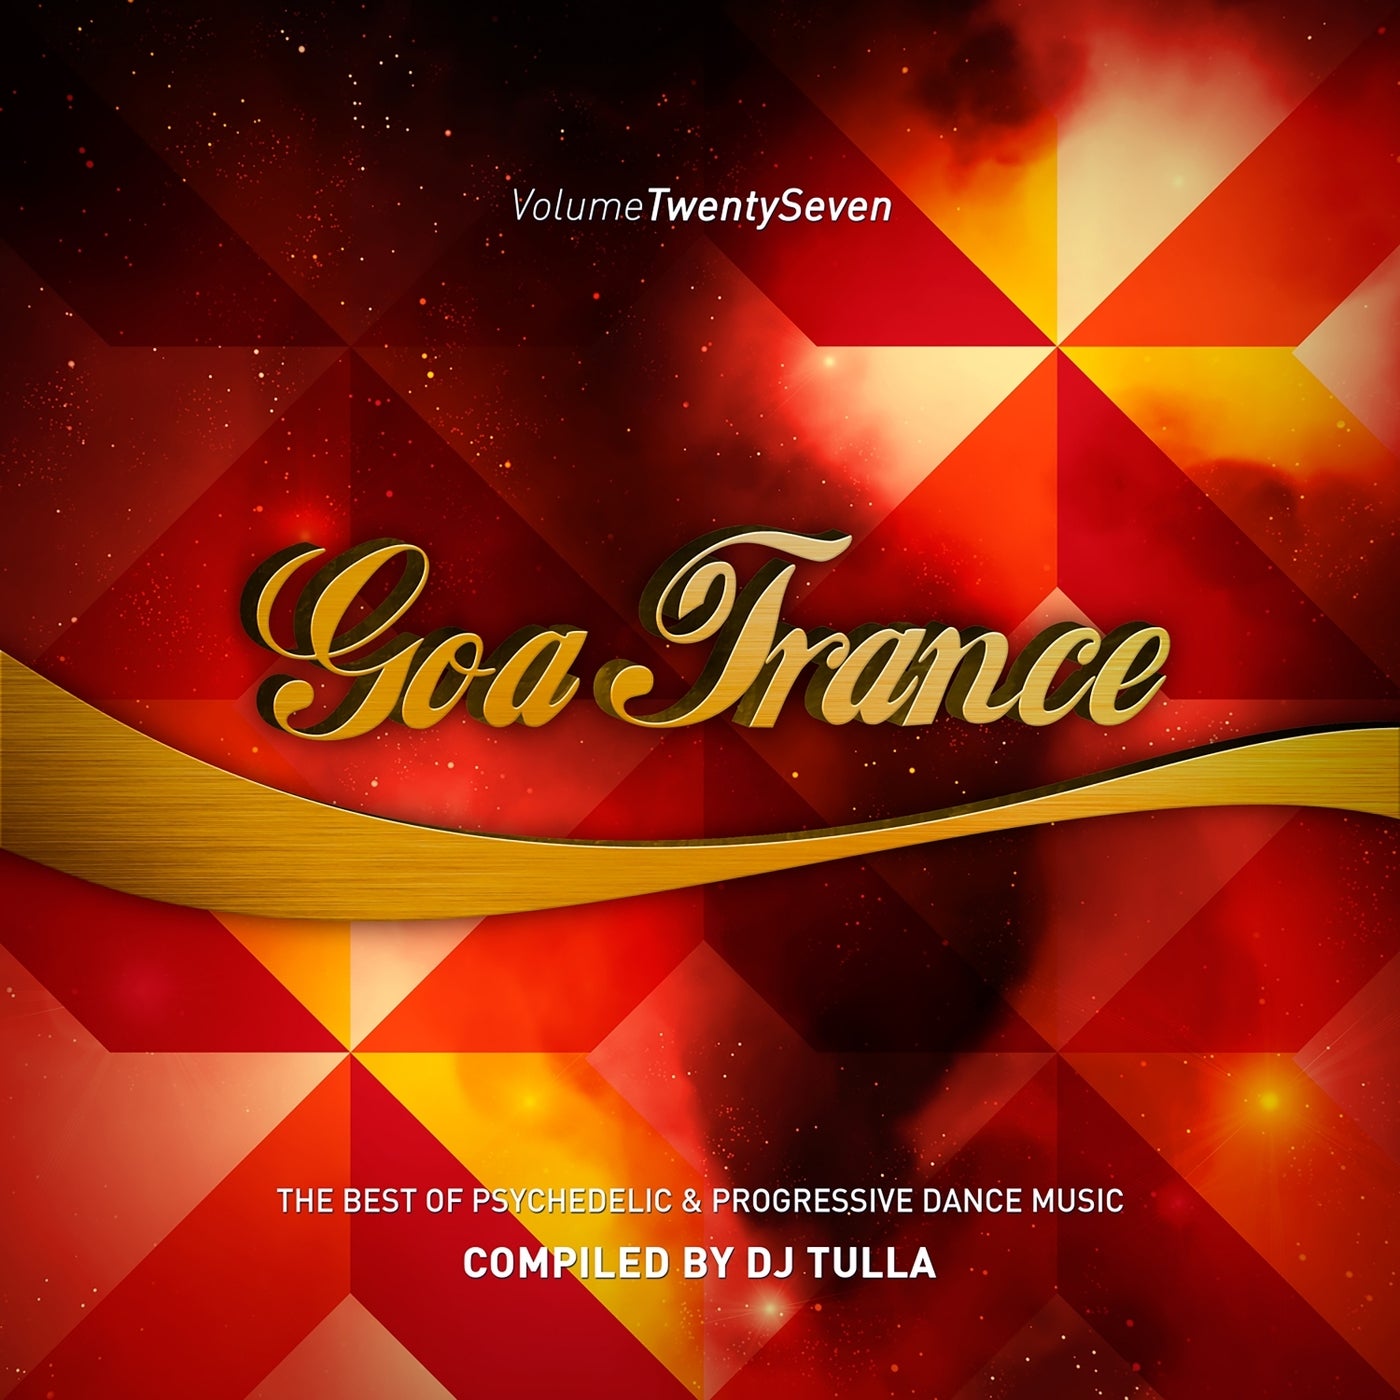 Goa Trance, Vol. 27